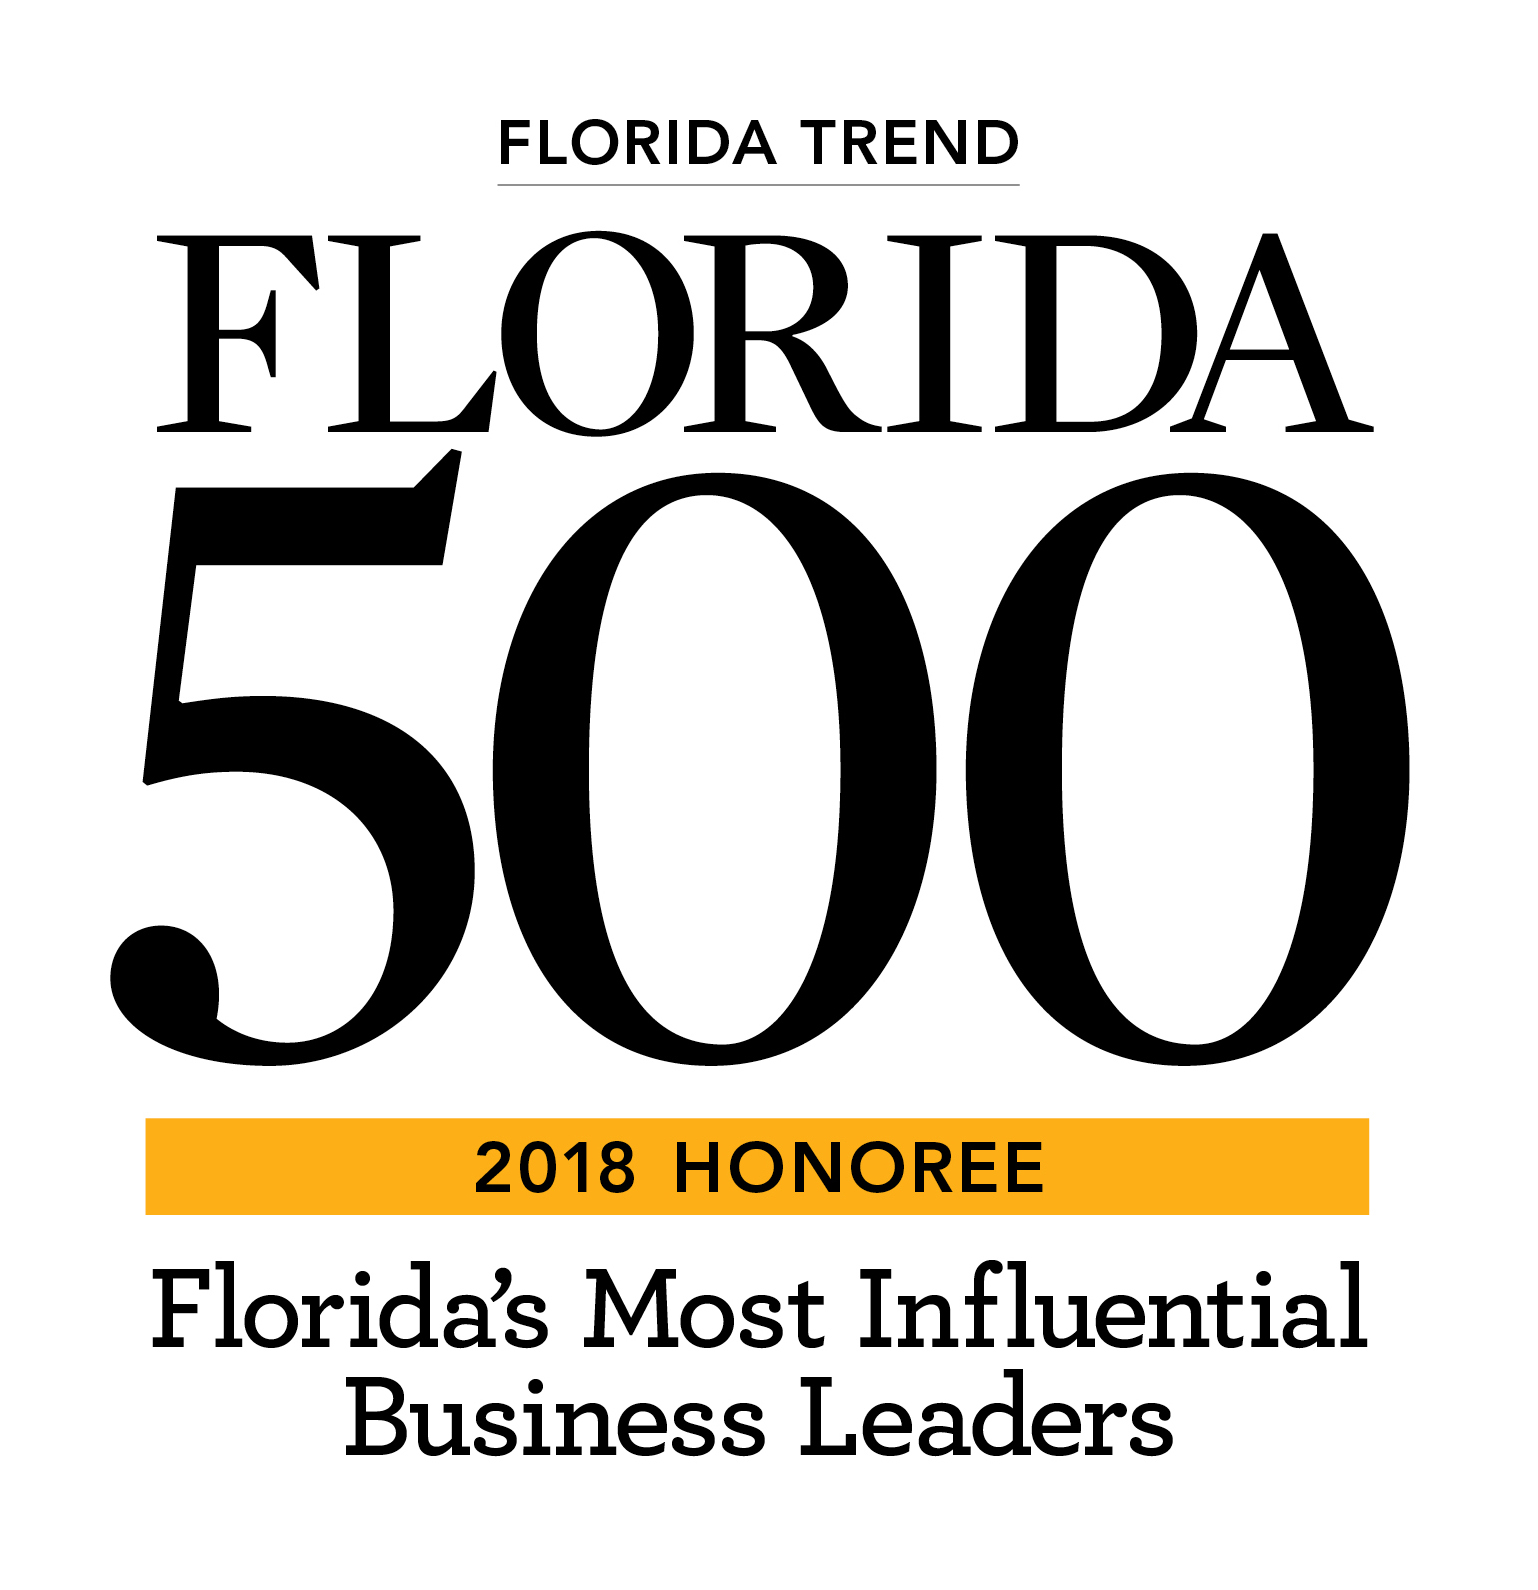 Florida Trend Florida 500 Honorees